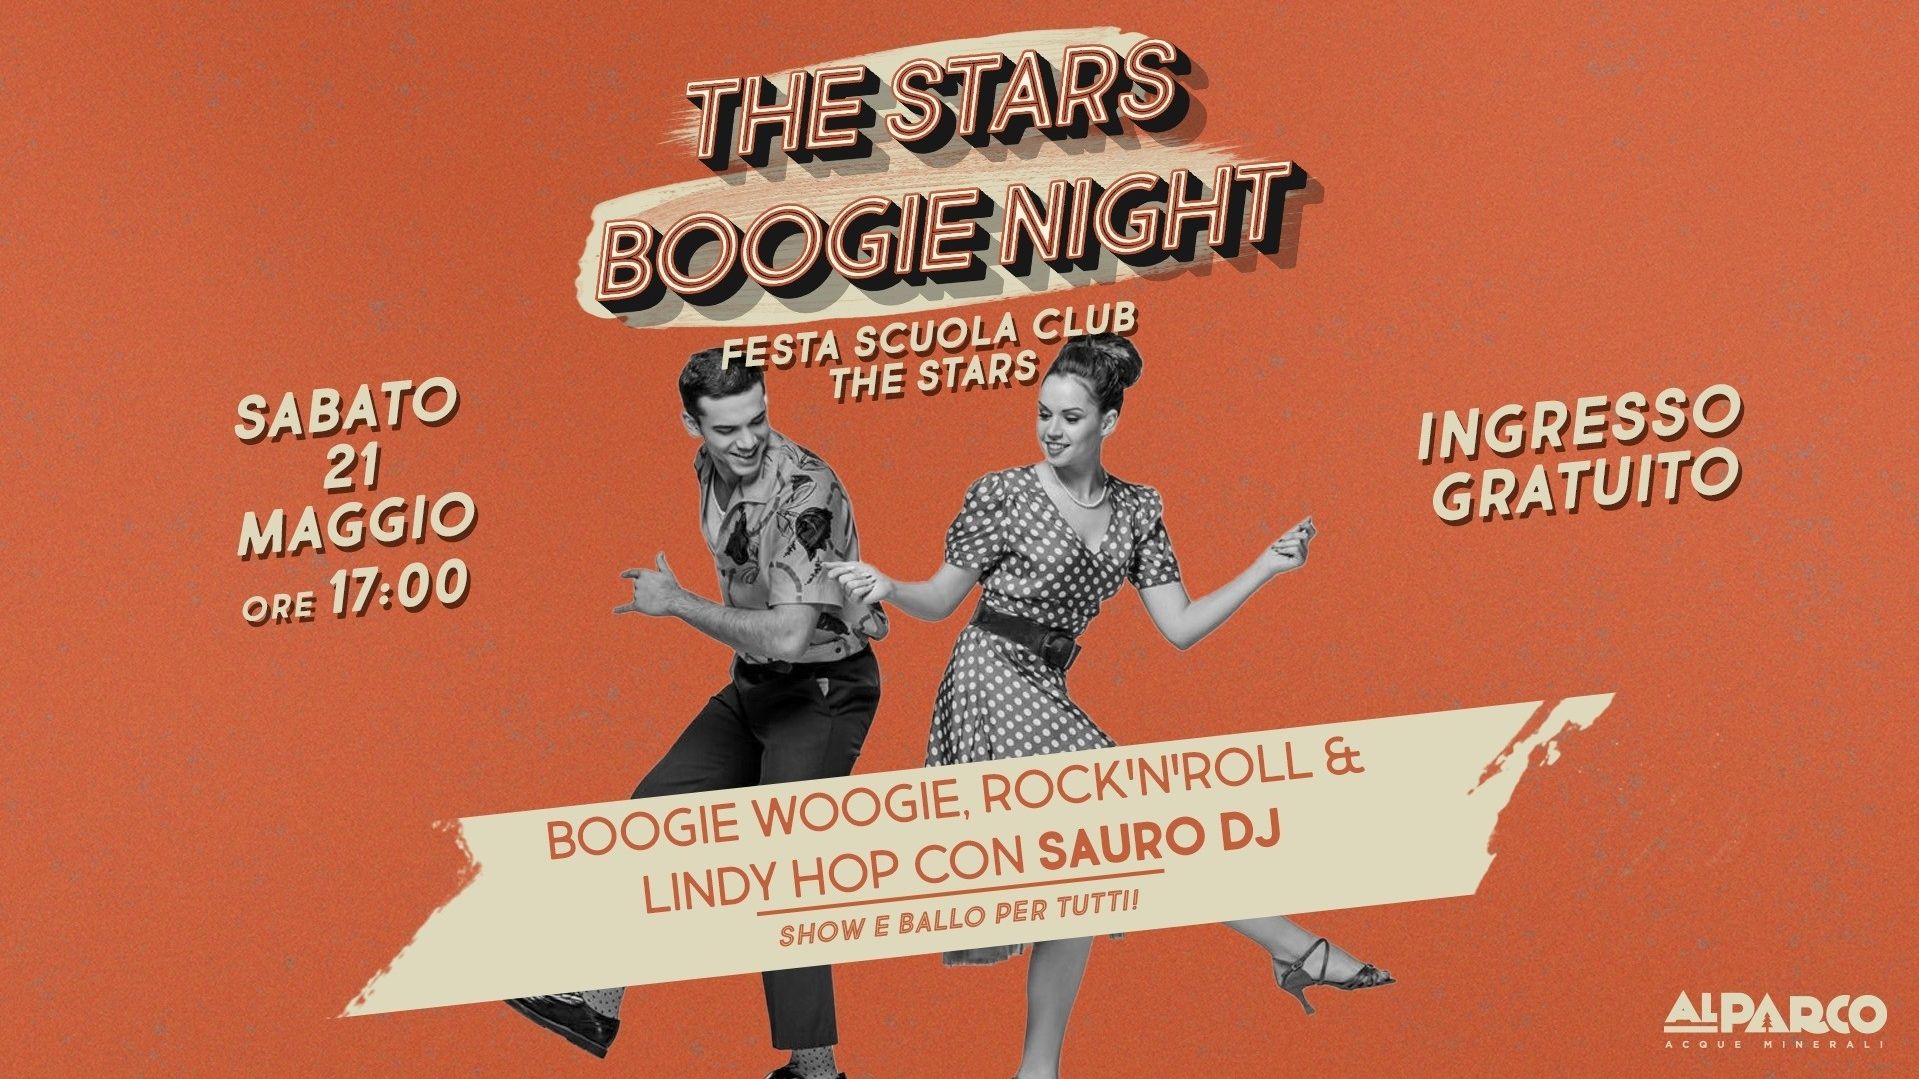 The Stars Boogie Night